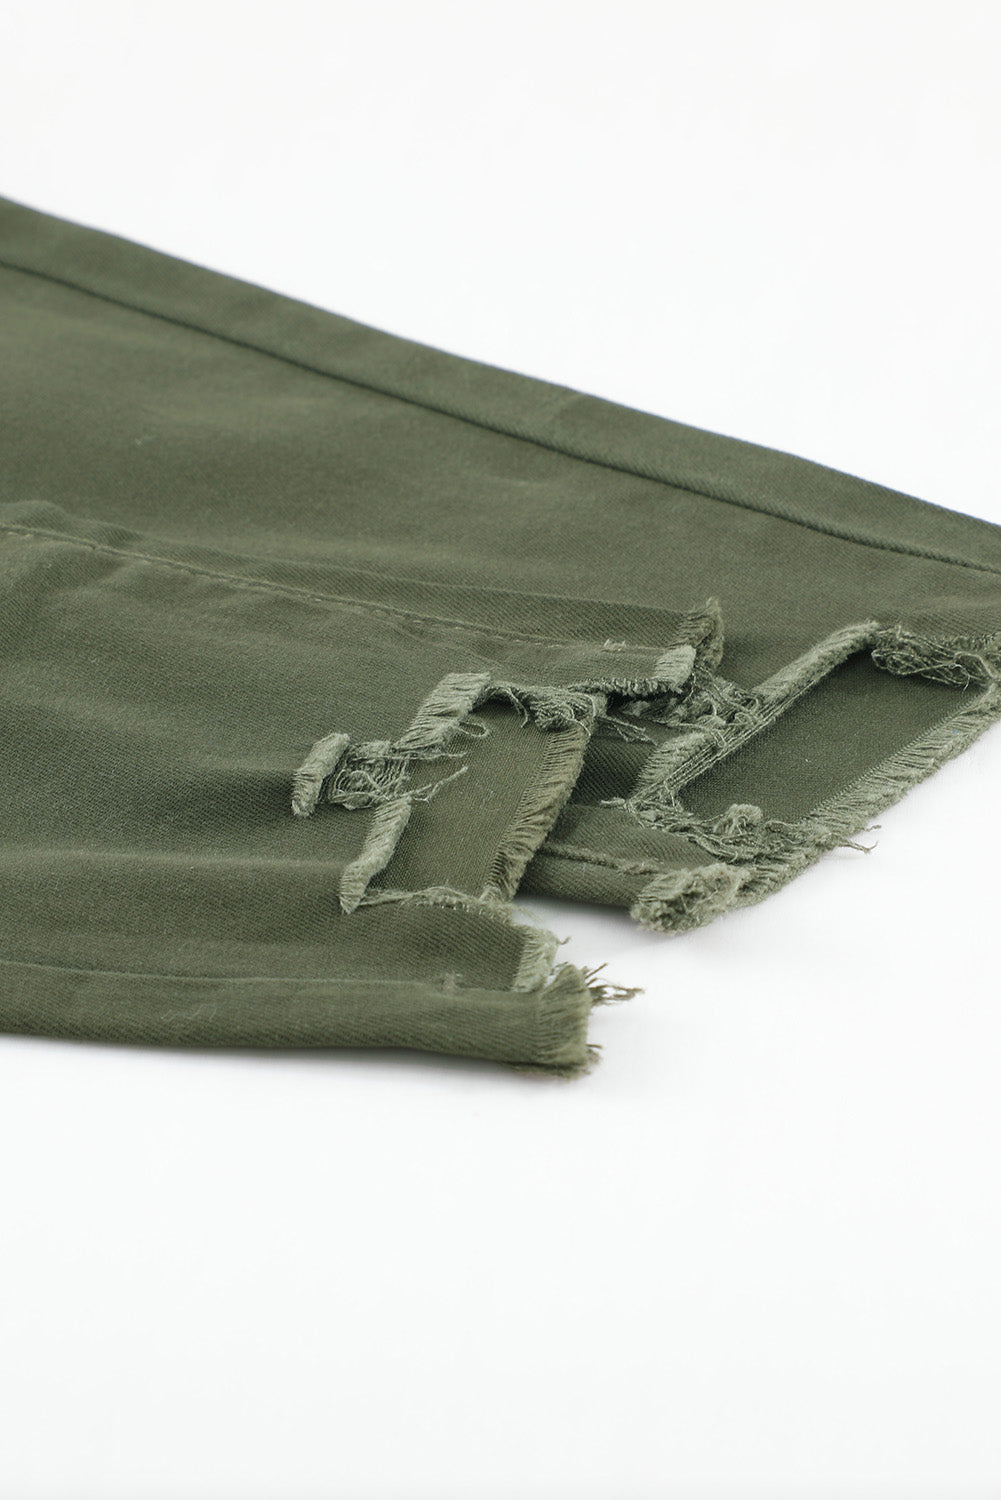 Green Plain High Waist Buttons Frayed Cropped Denim Jeans Jeans JT's Designer Fashion